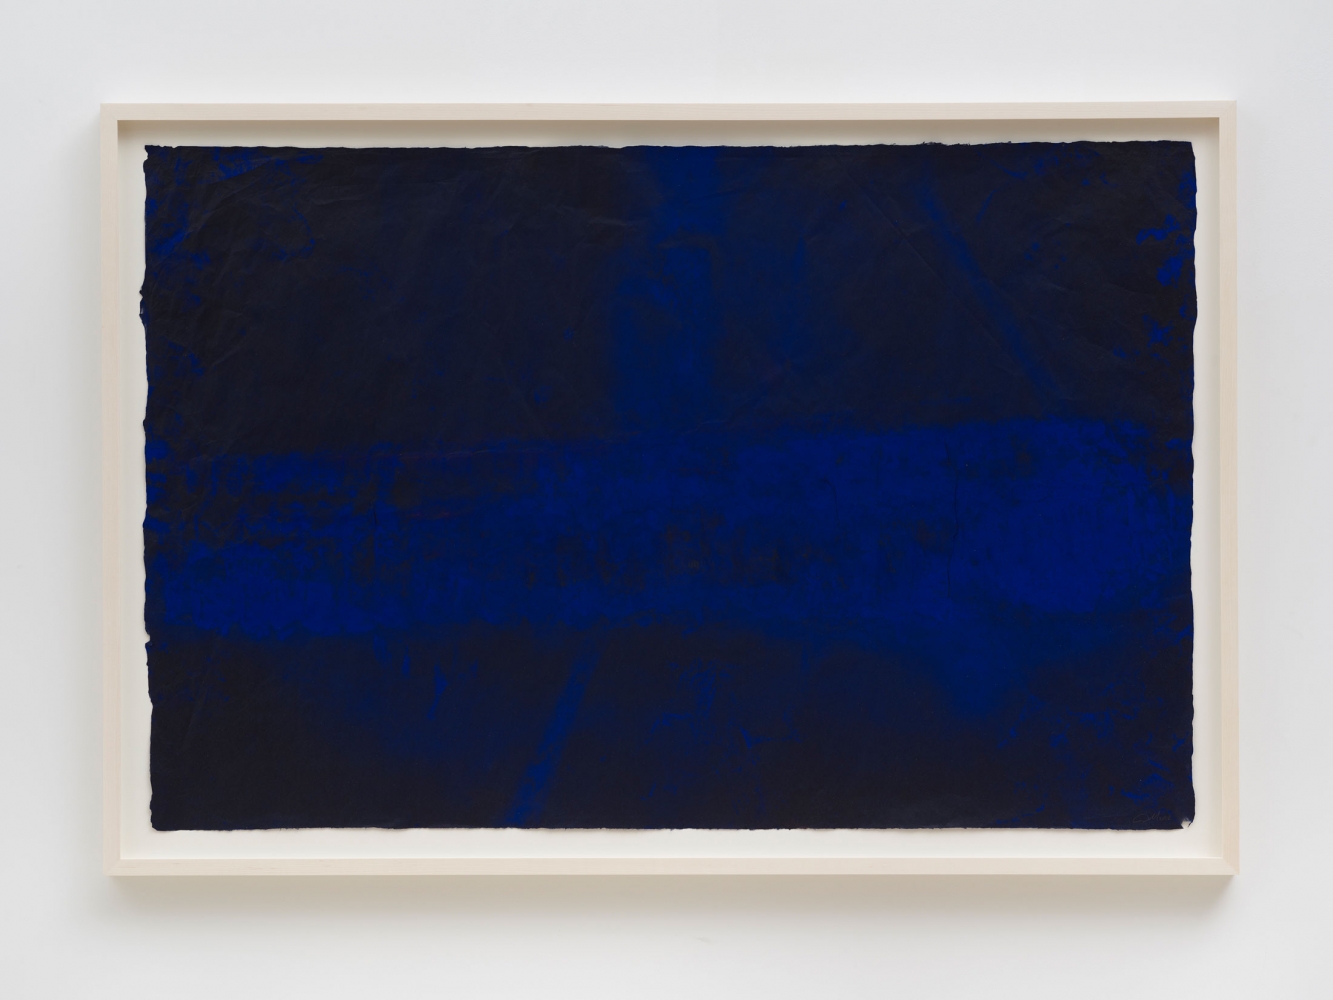 Jason Moran
Blue Calamintha, 2020
Pigment on Indigo dyed Gampi paper
25 x 38 1/4 inches
(63.5 x 97.2 cm)